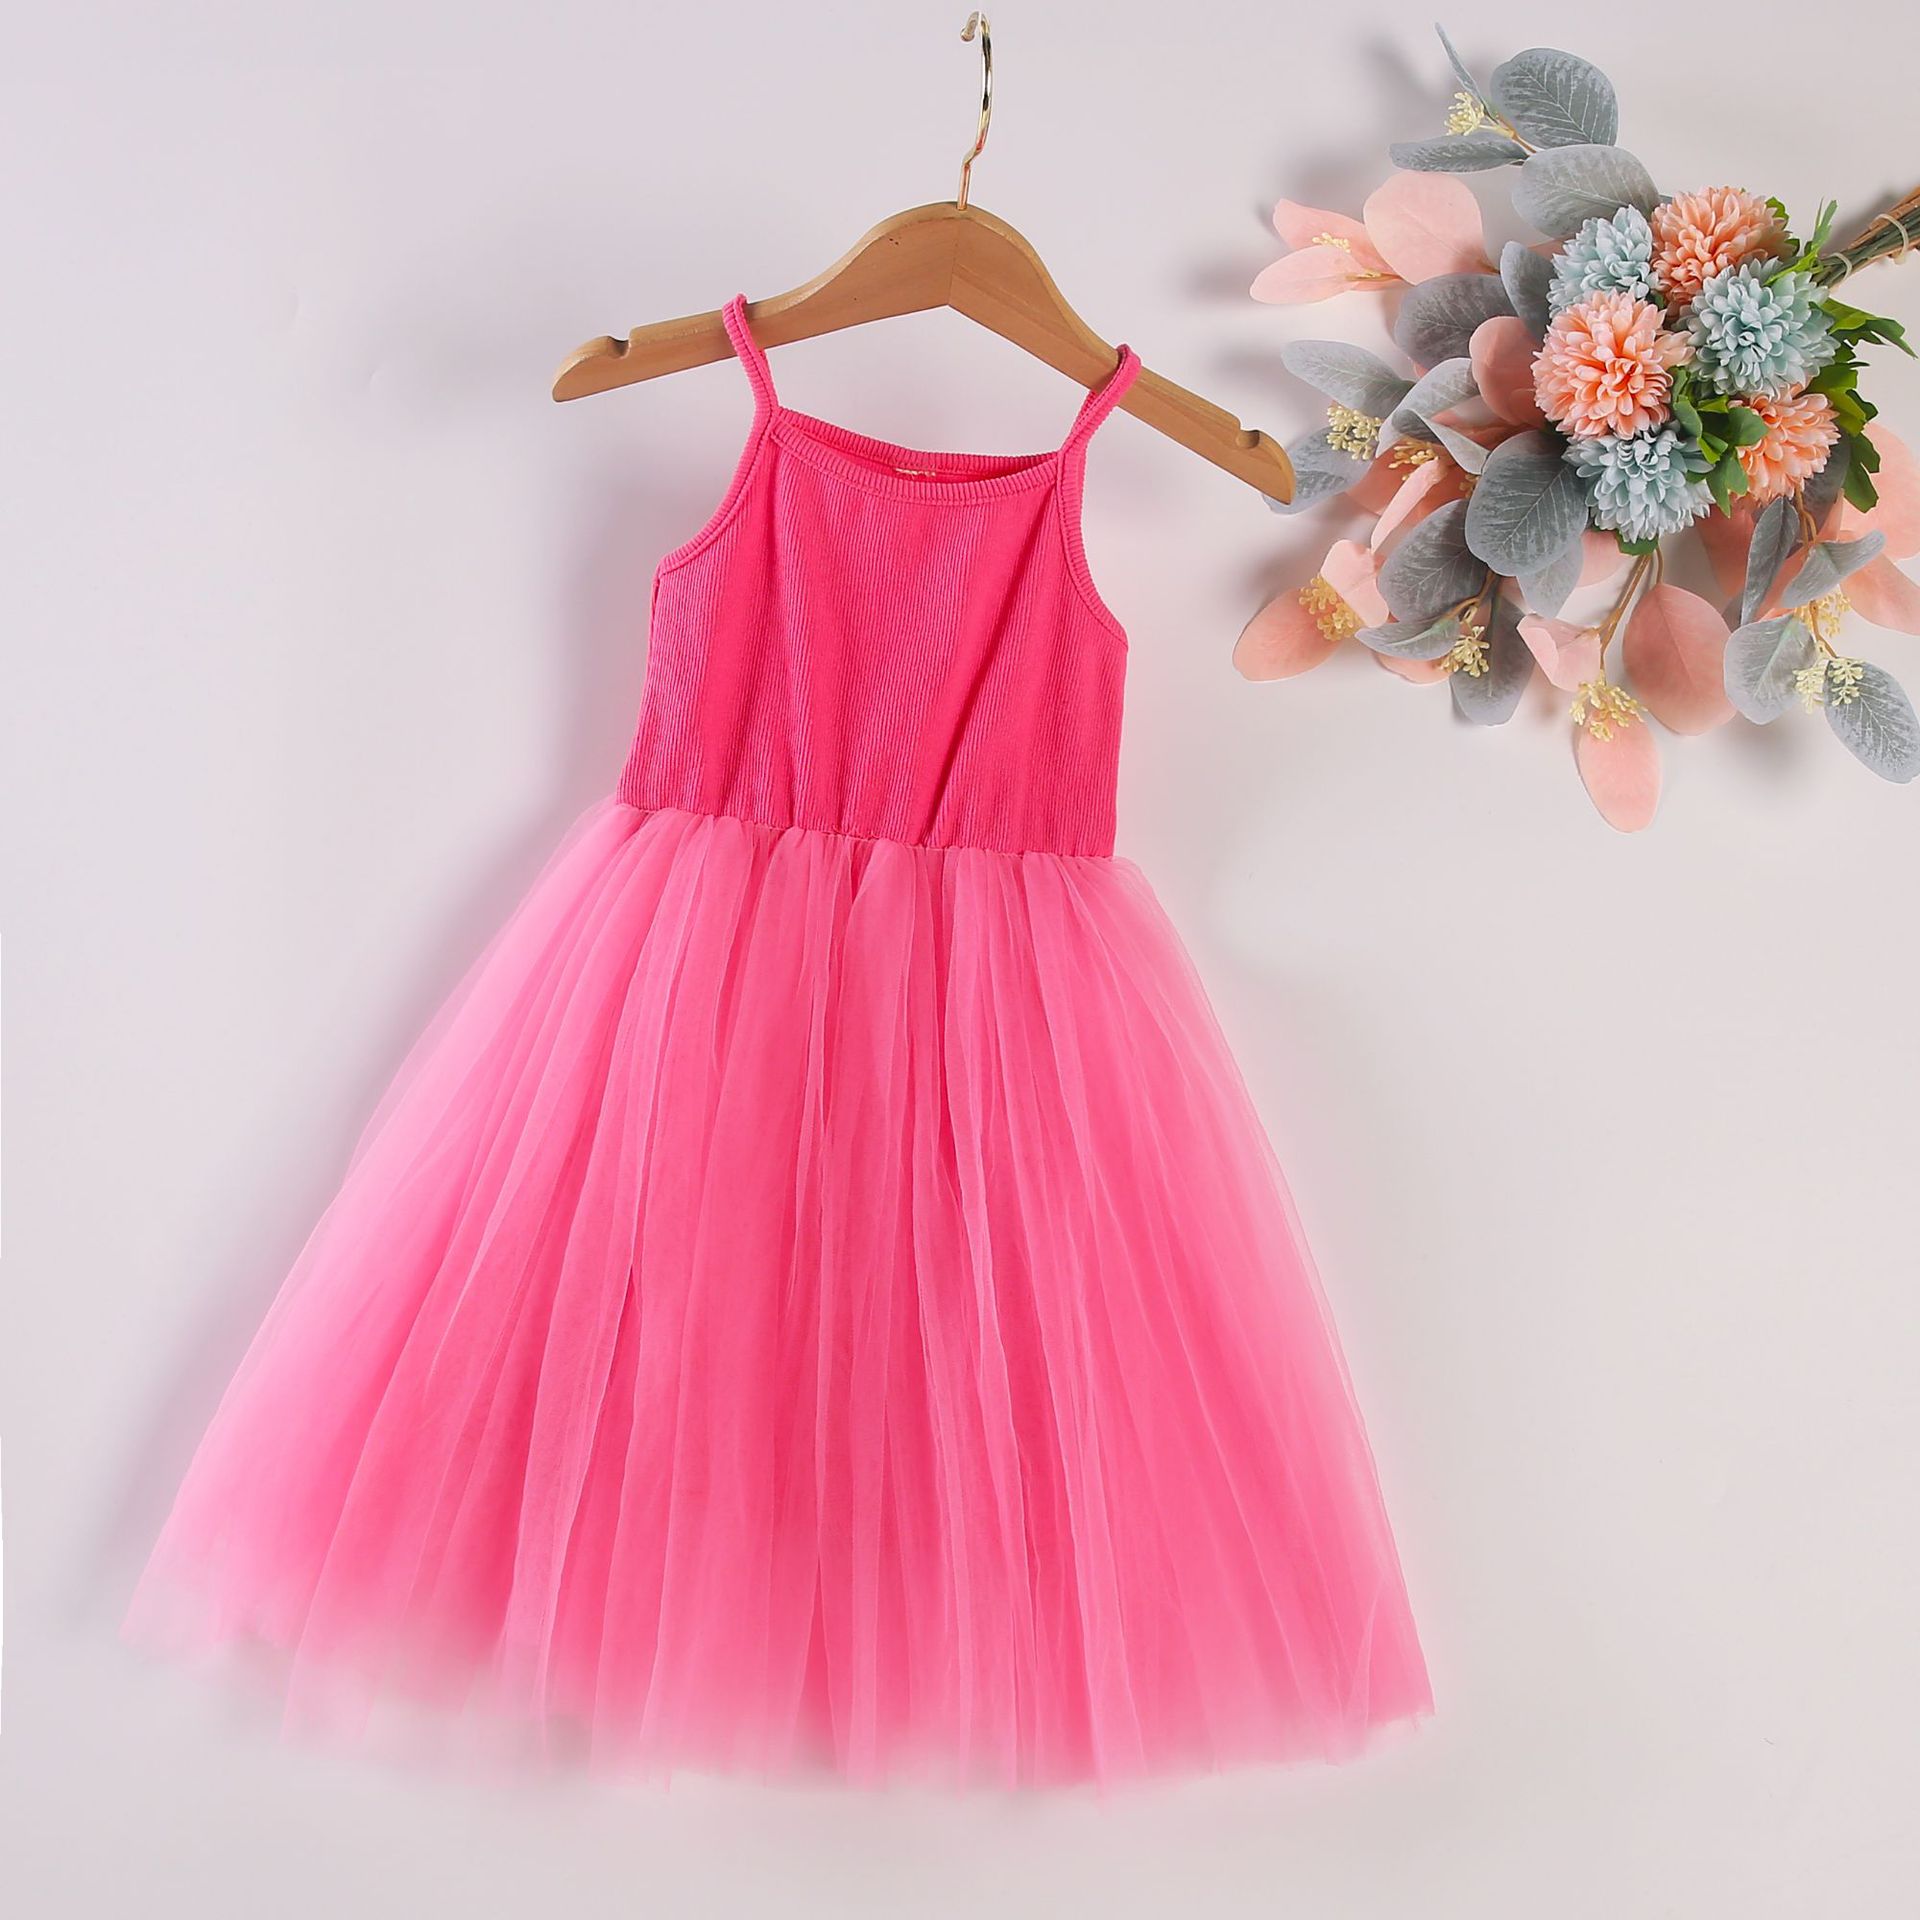 INS 스타일의 새로운 여자 옷 의류 드레스 사랑스러운 소매 소매 여름 단색 드레스 100% 면화 소녀 어린이 우아함